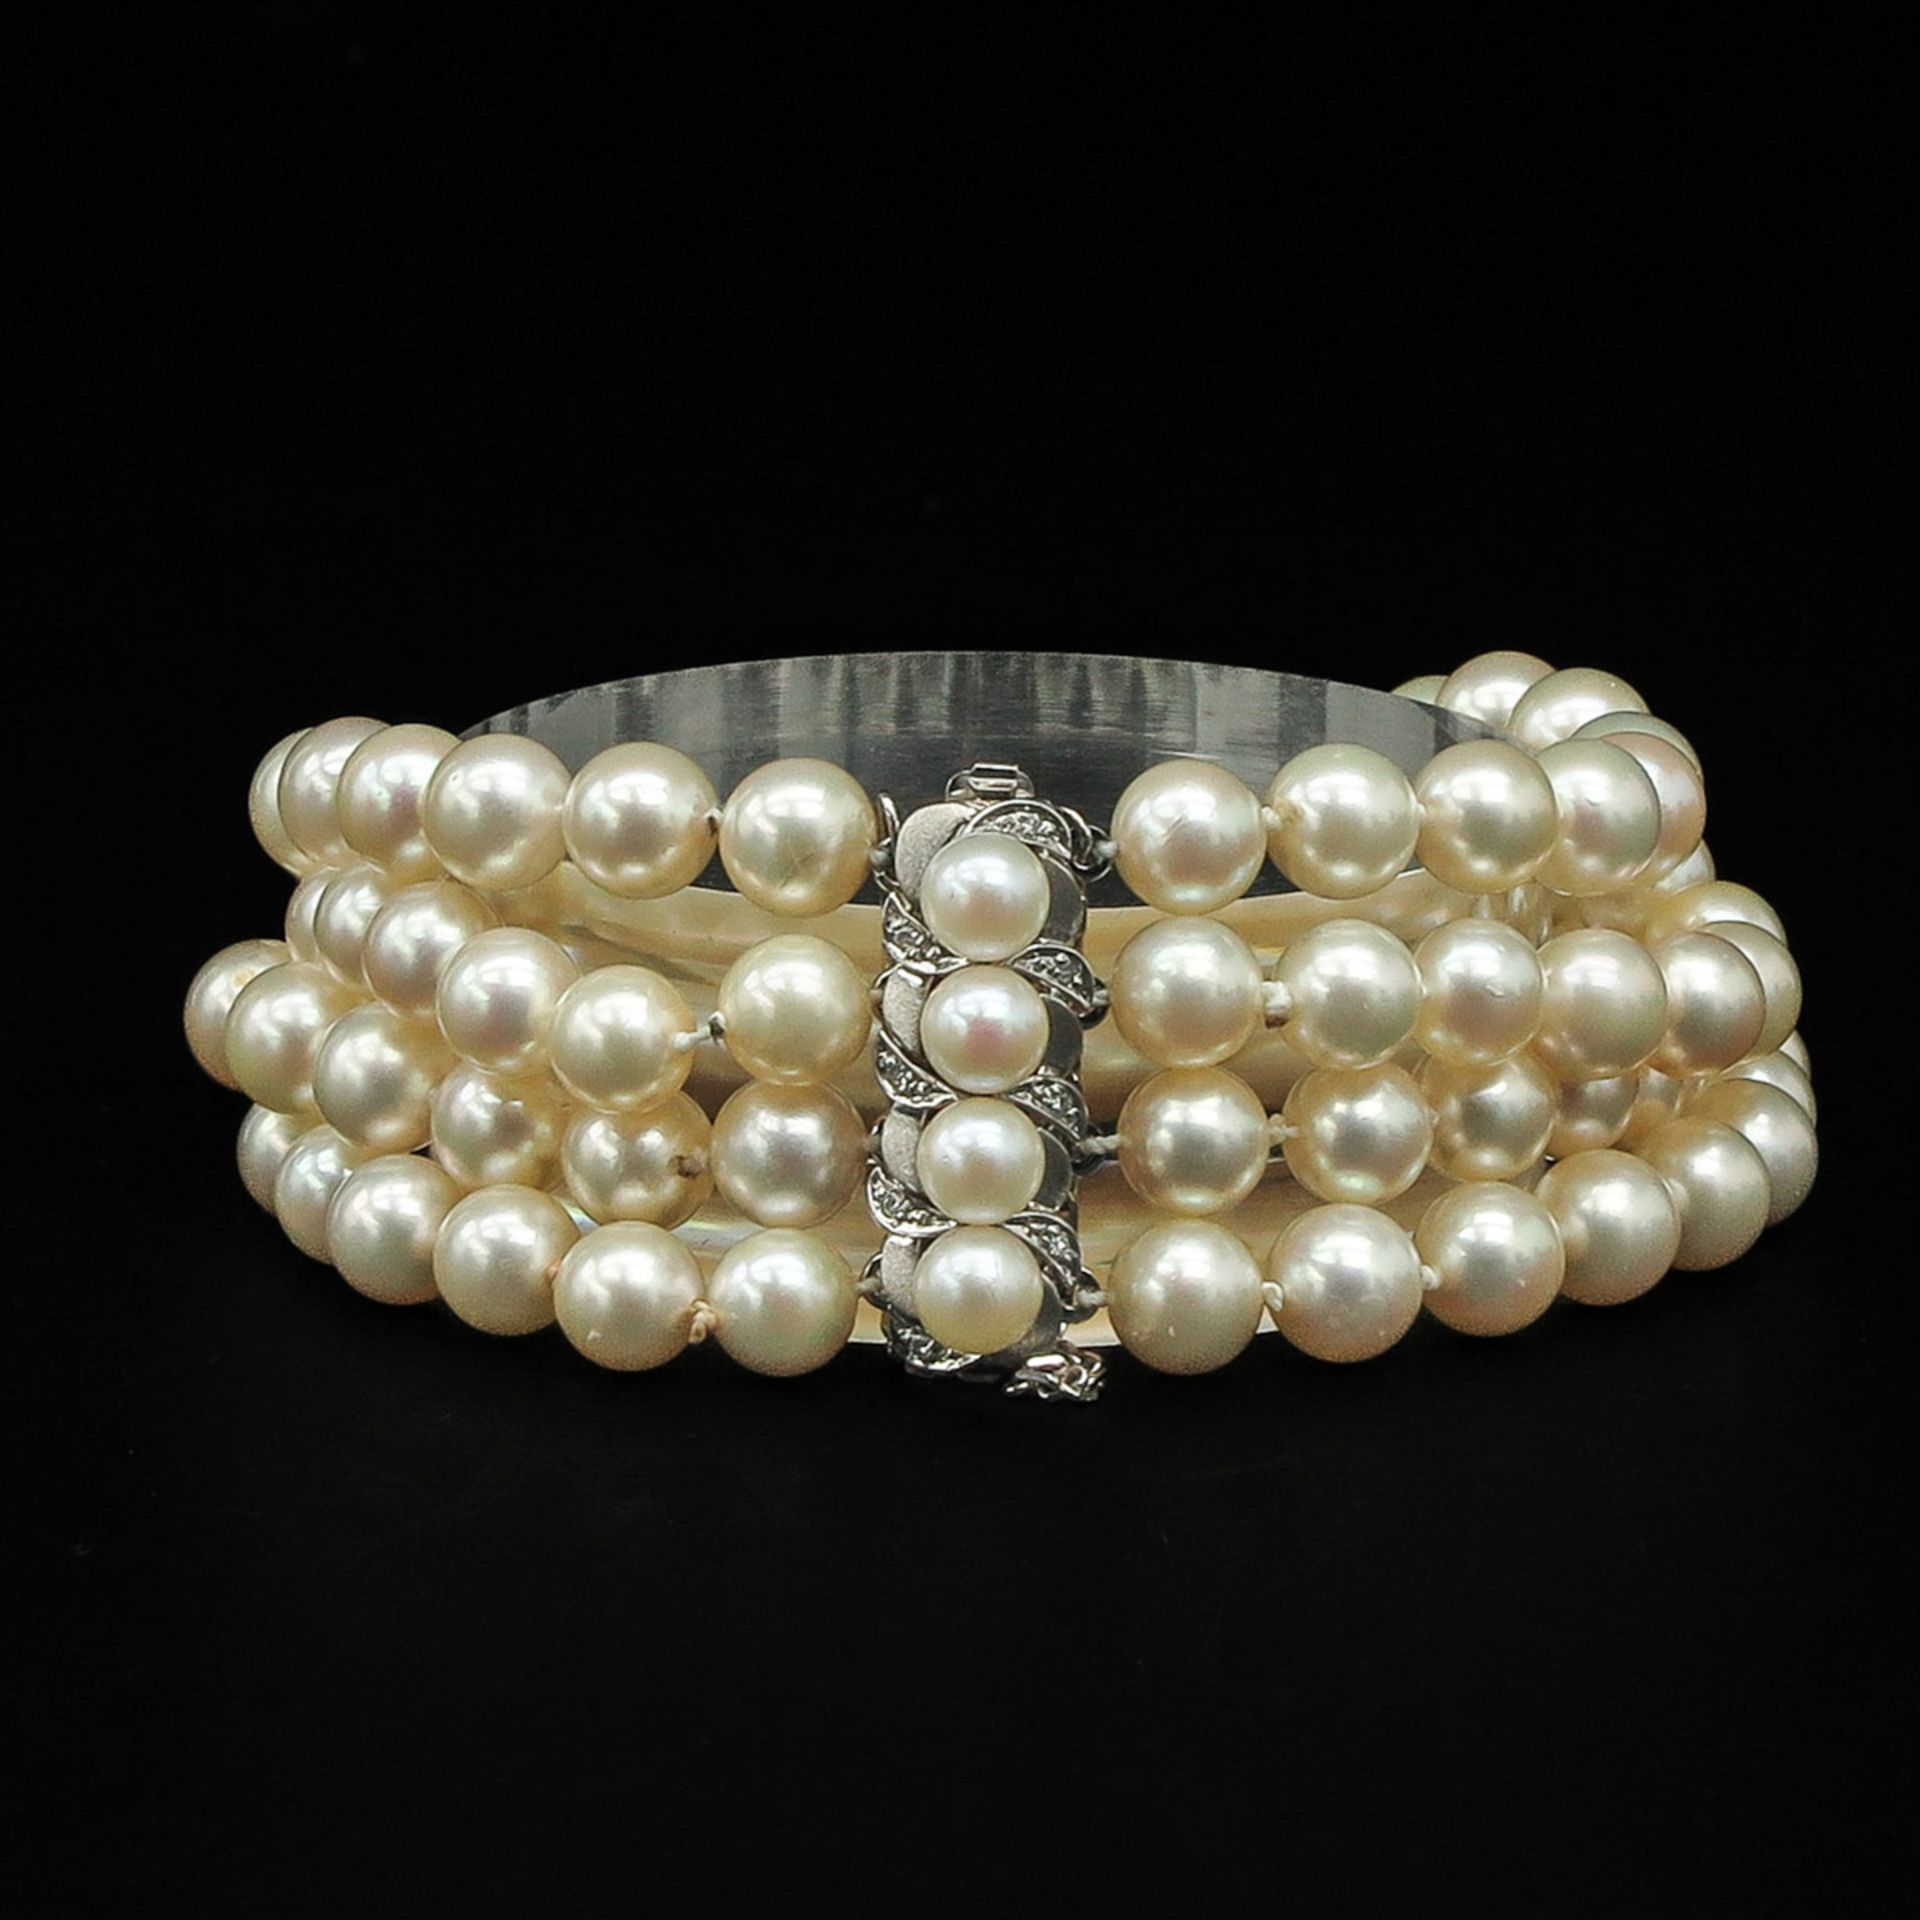 A 4 Strand Pearl Bracelet